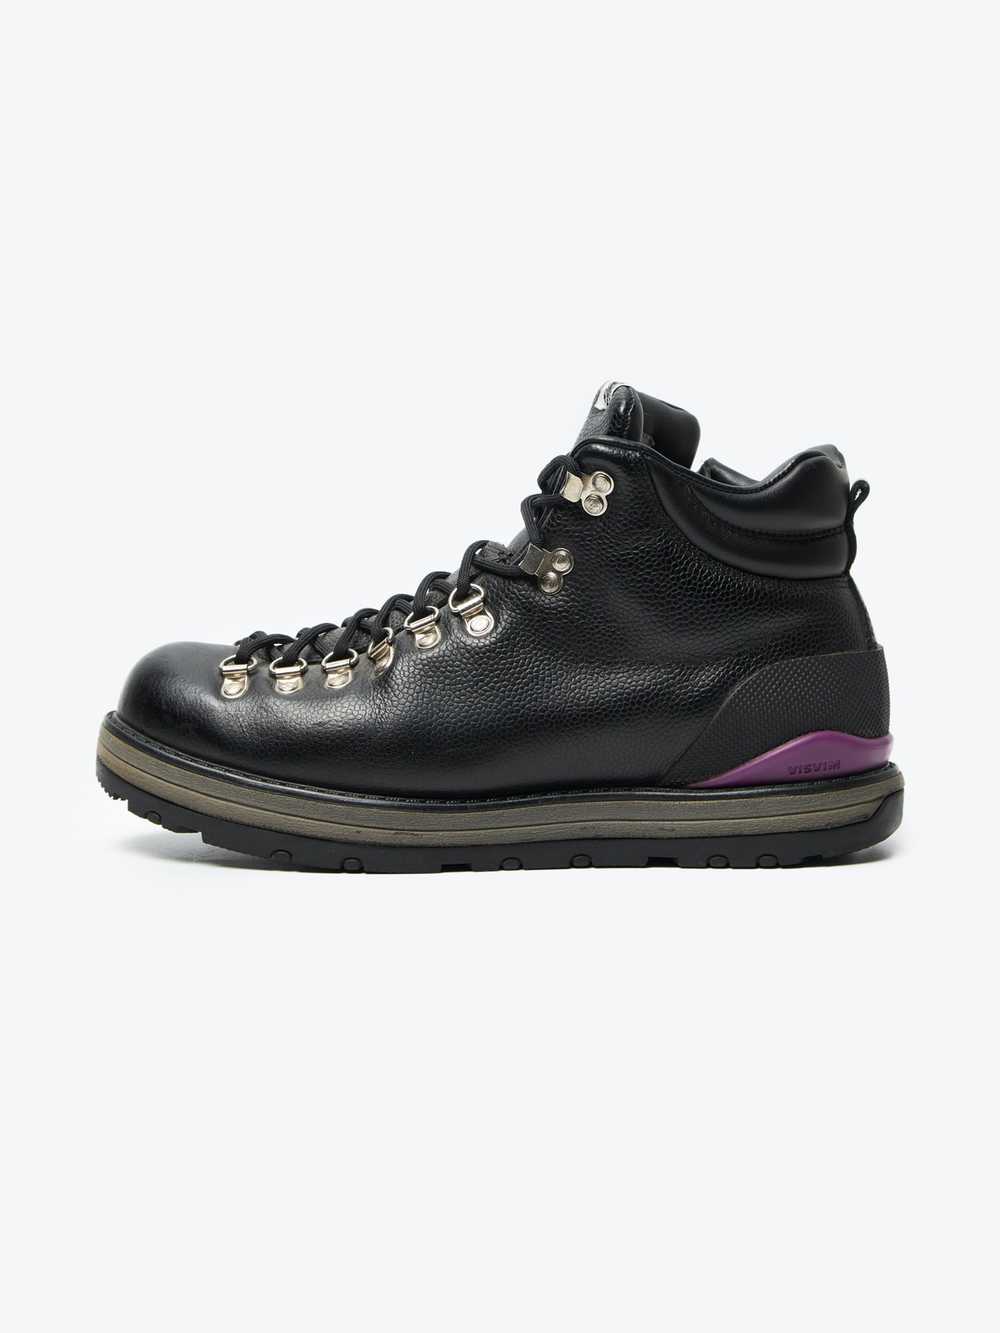 Visvim Black Hiking Detailed Leather Boots - image 3